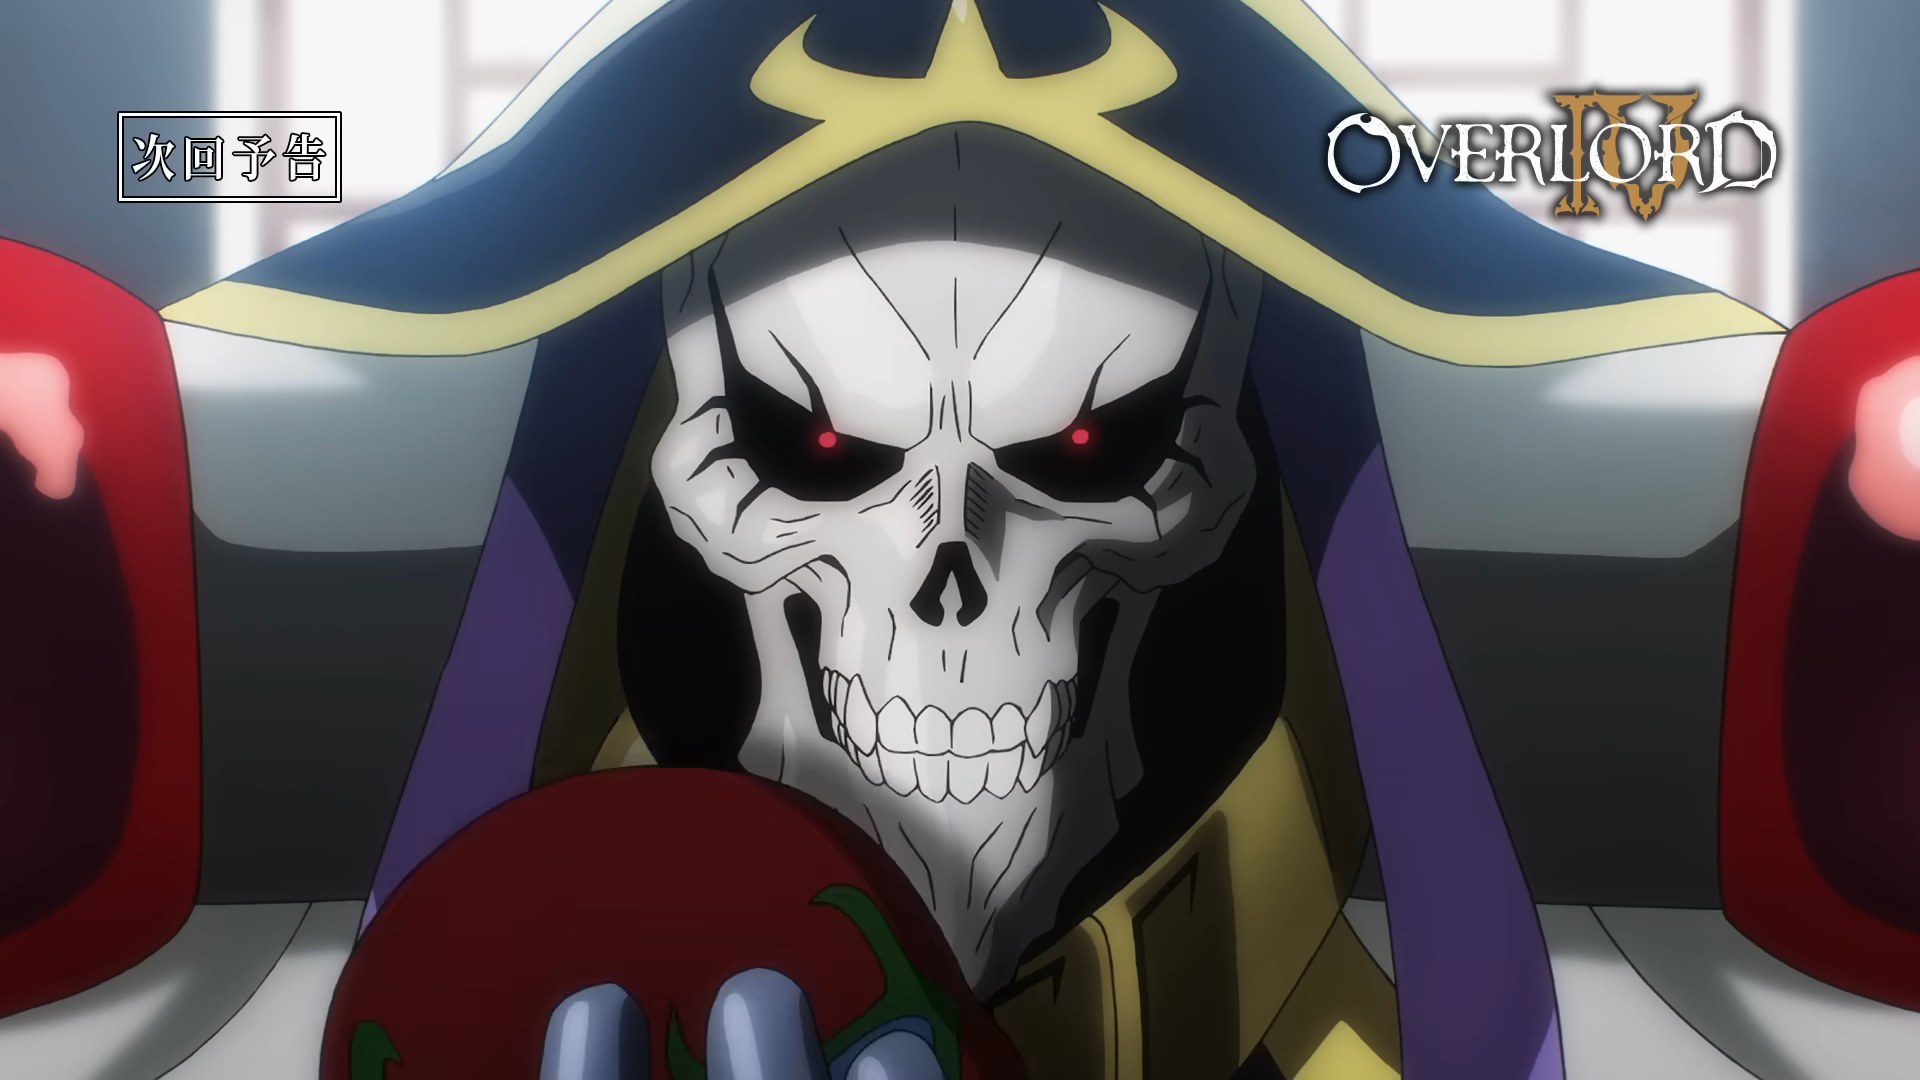 Assistir Overlord 4: Episódio 13 Online - Animes BR